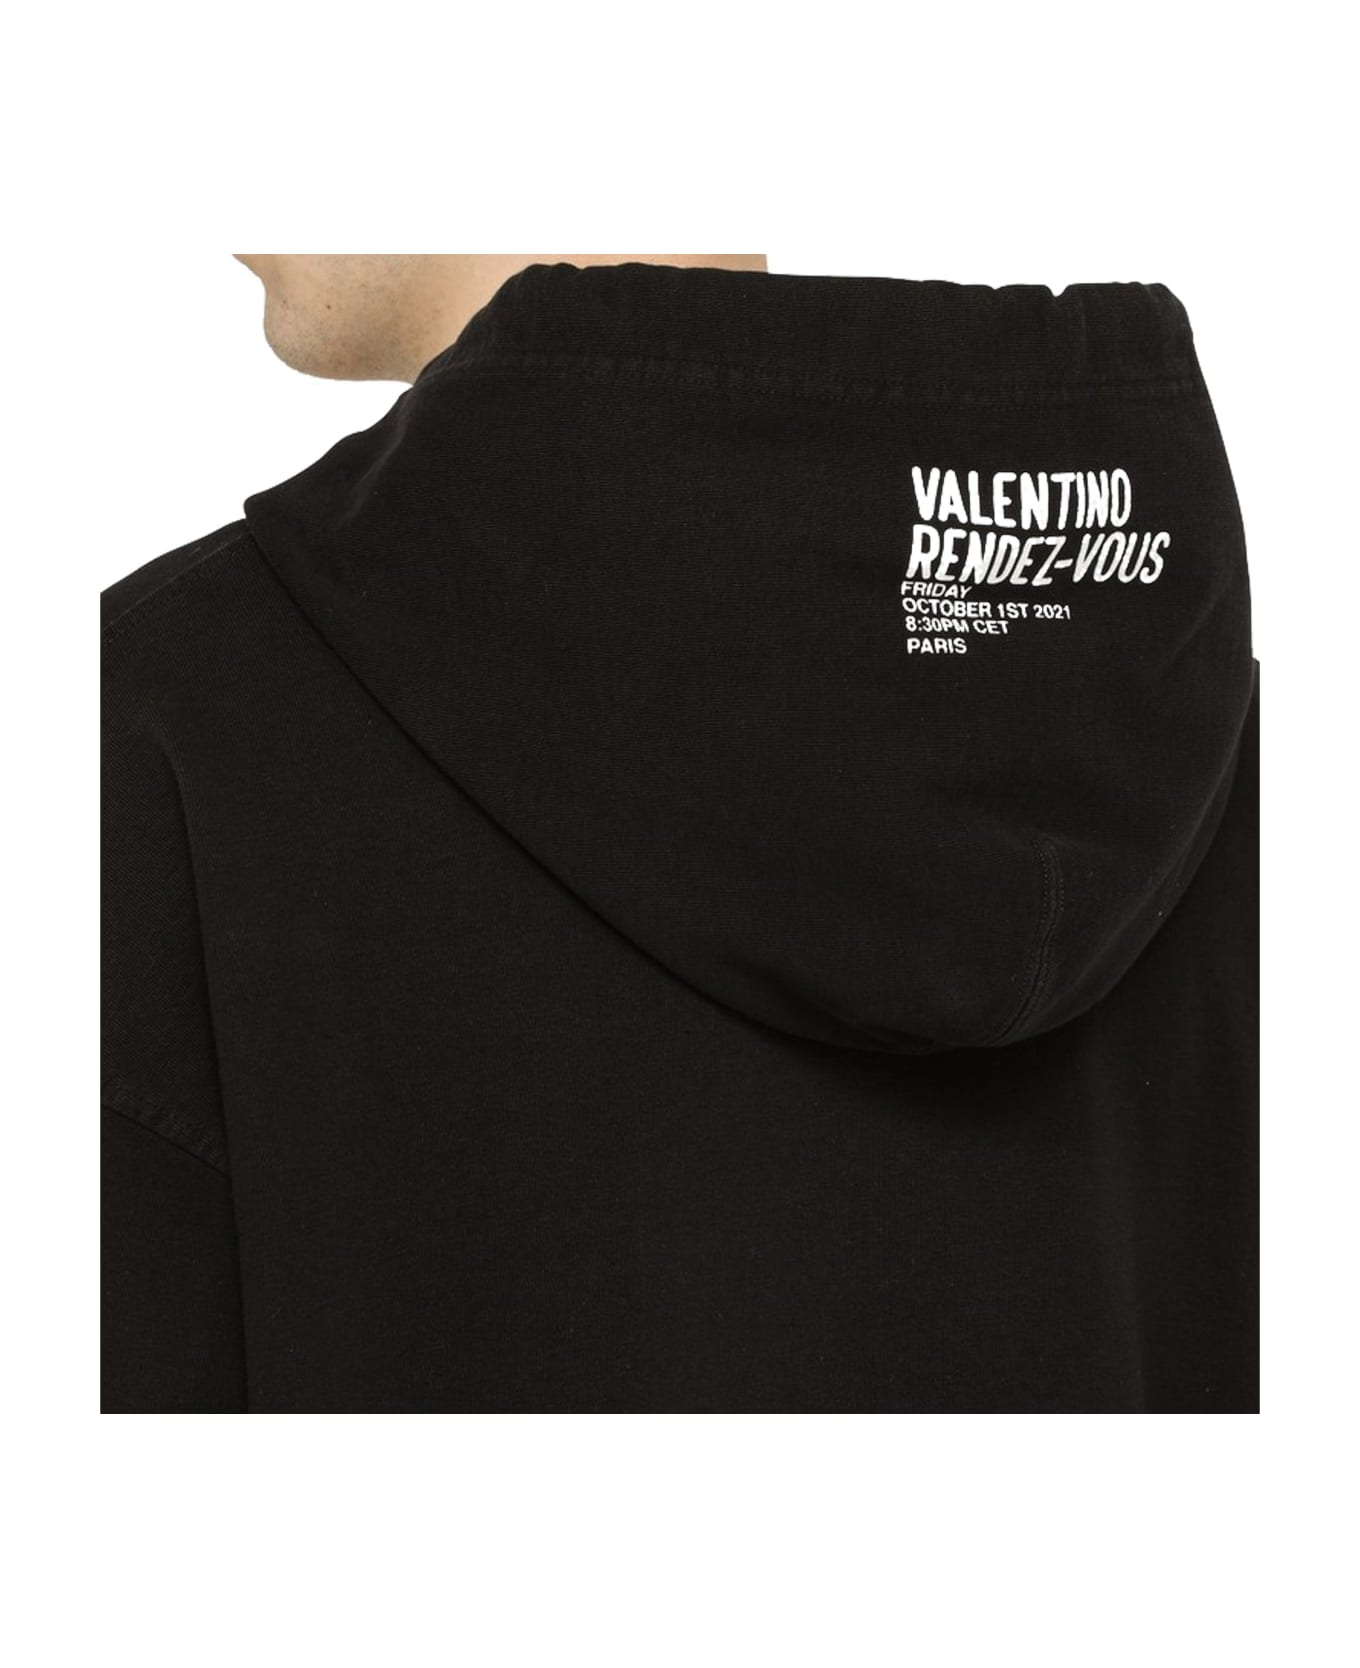 Valentino Graphic Printed Sweatshirt - Black フリース